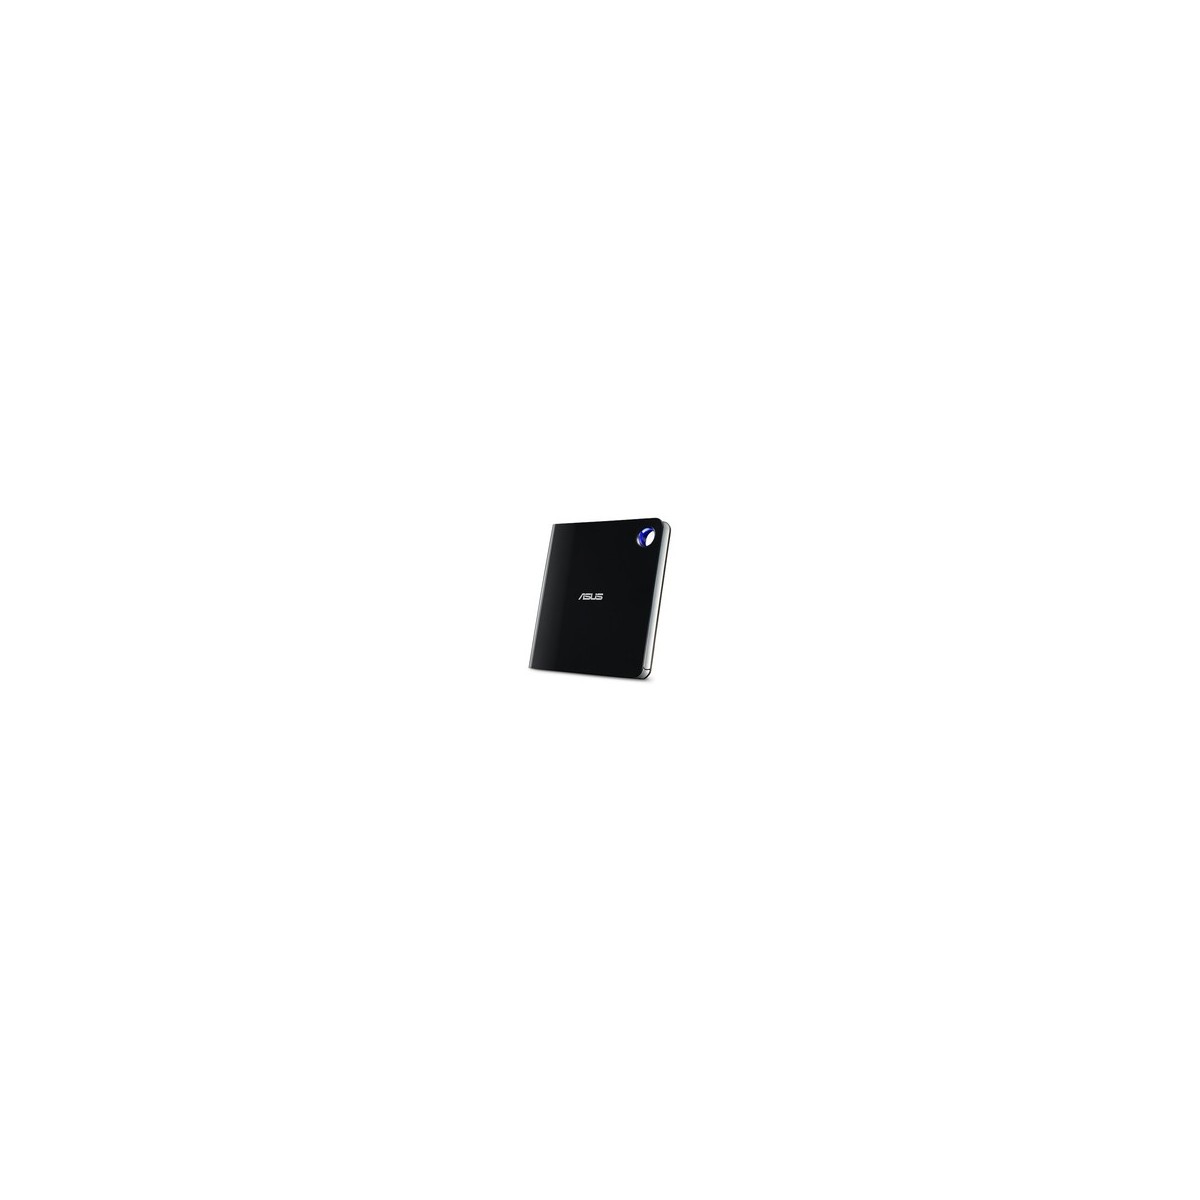 ASUS SBW-06D5H-U - Black - Silver - Tray - Desktop-Notebook - Blu-Ray RW - USB 3.1 Gen 1 - 80,120 mm